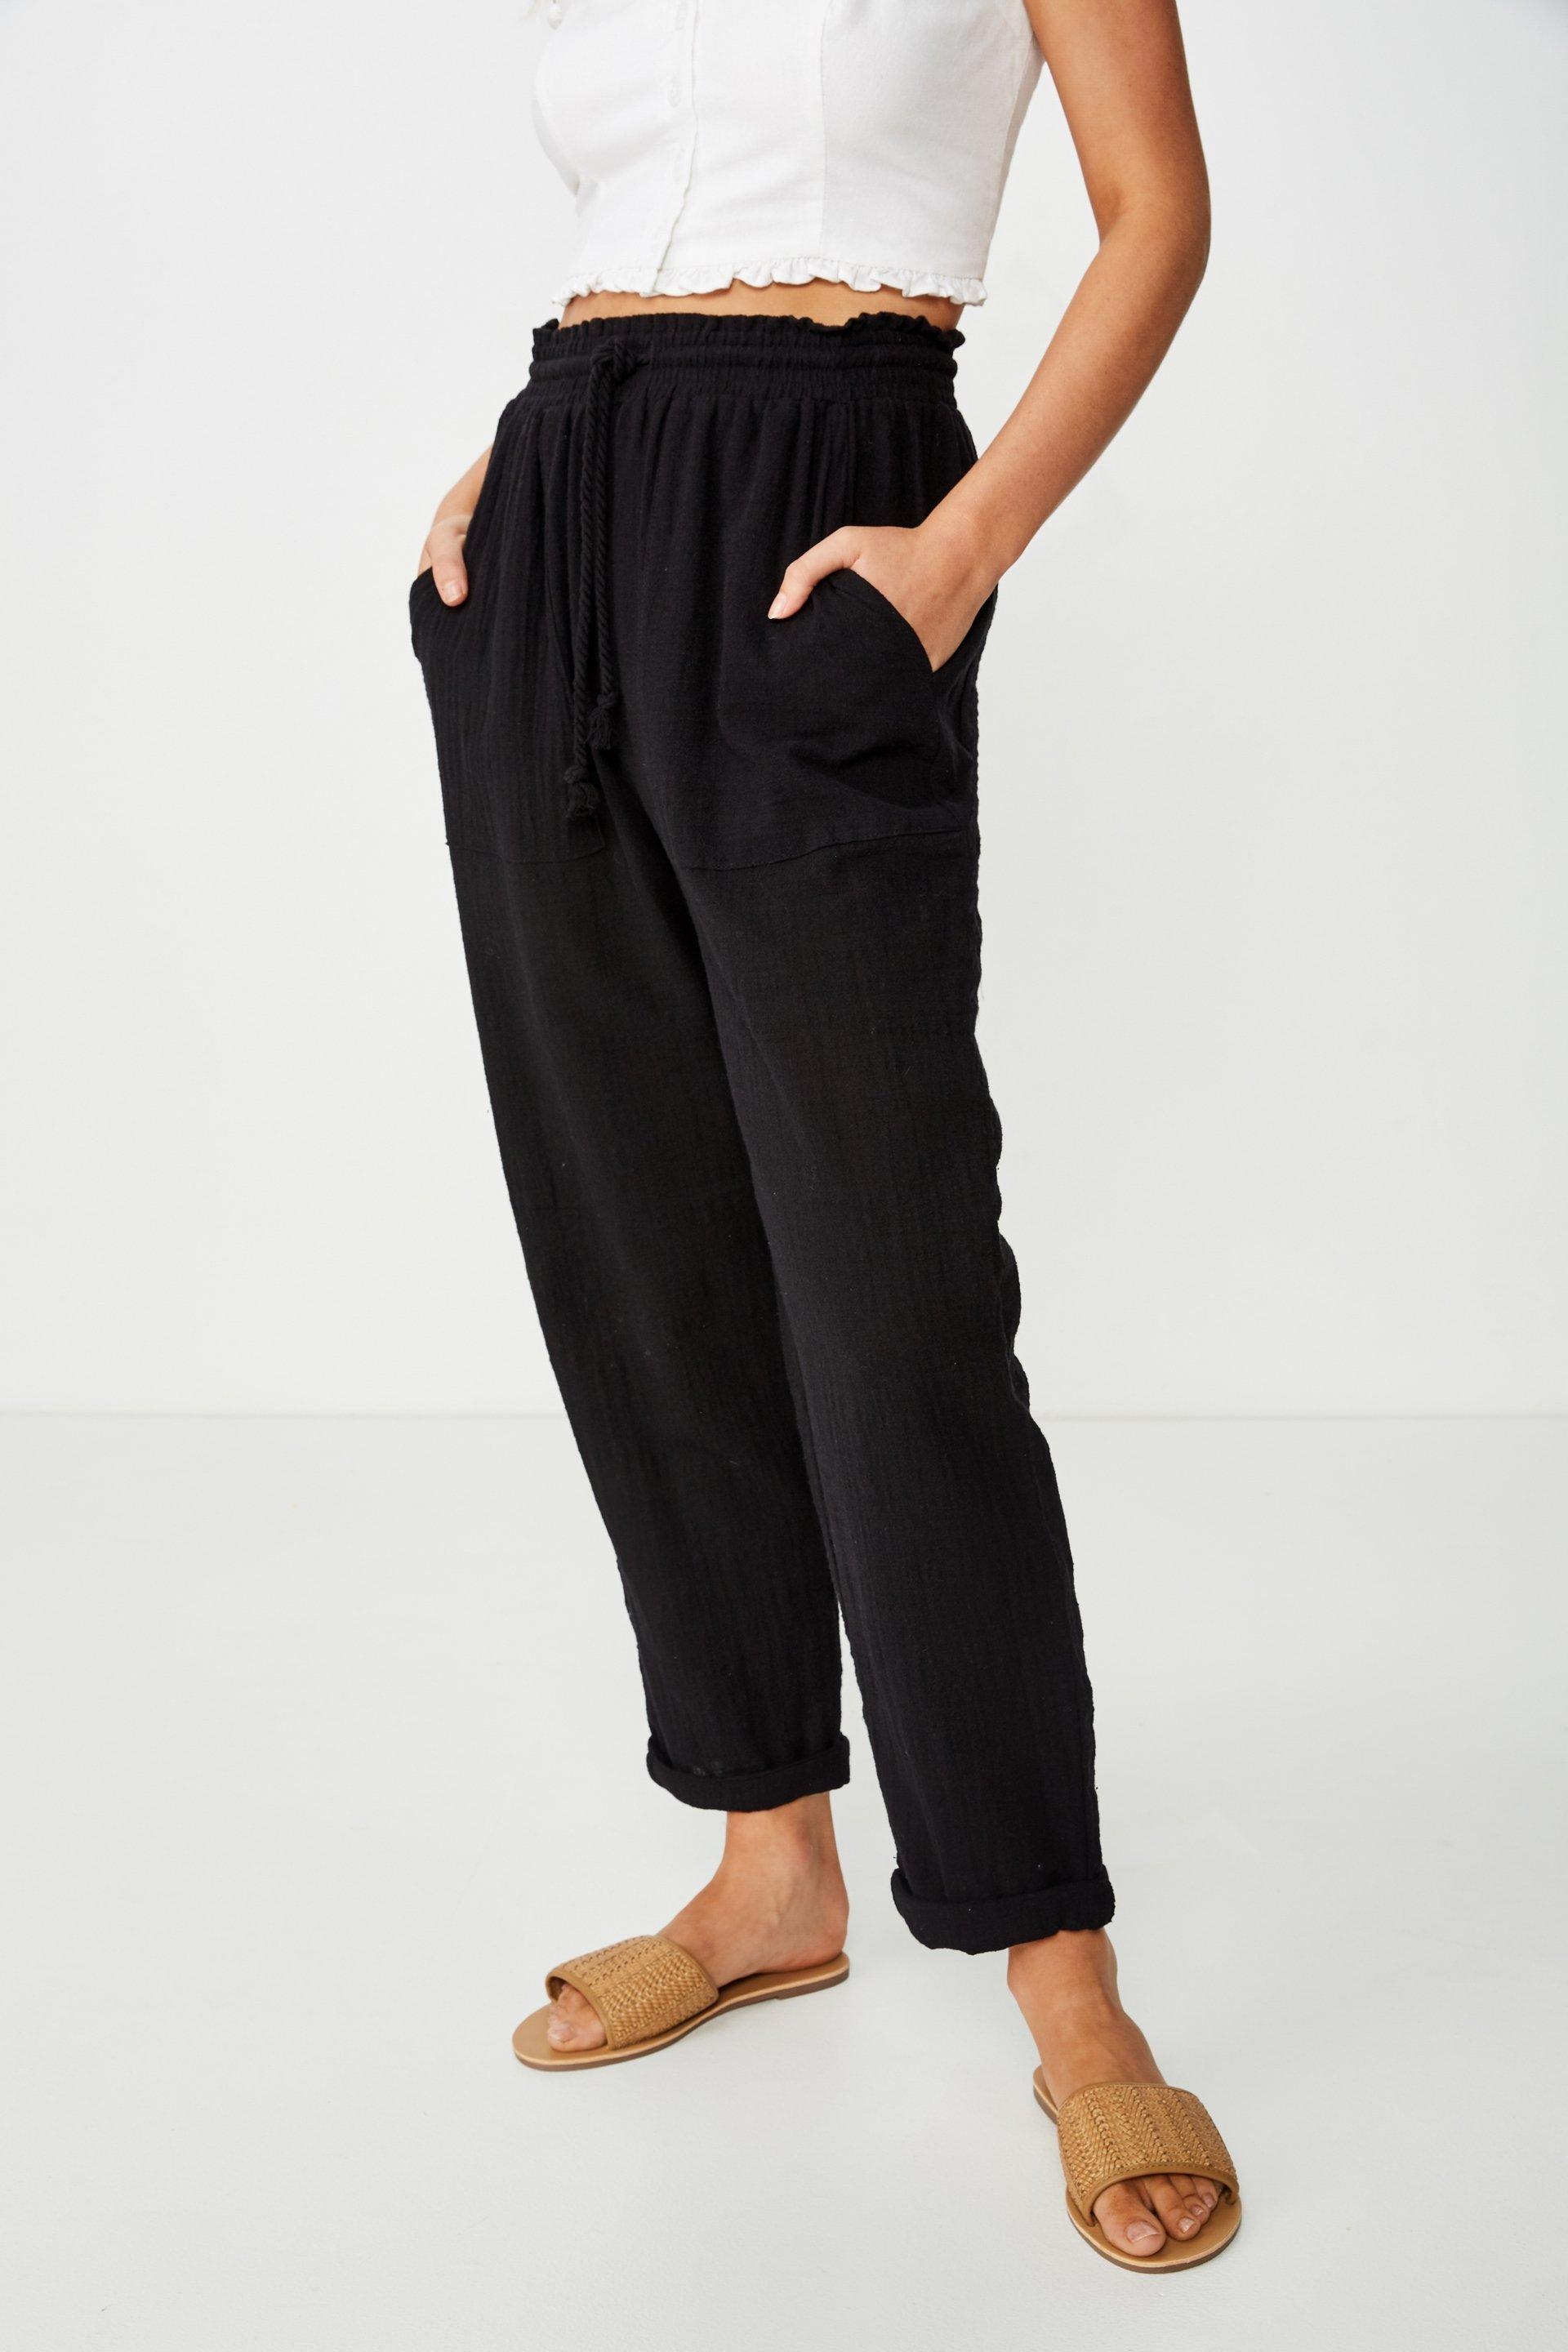 Beach resort pants - black Cotton On Trousers | Superbalist.com